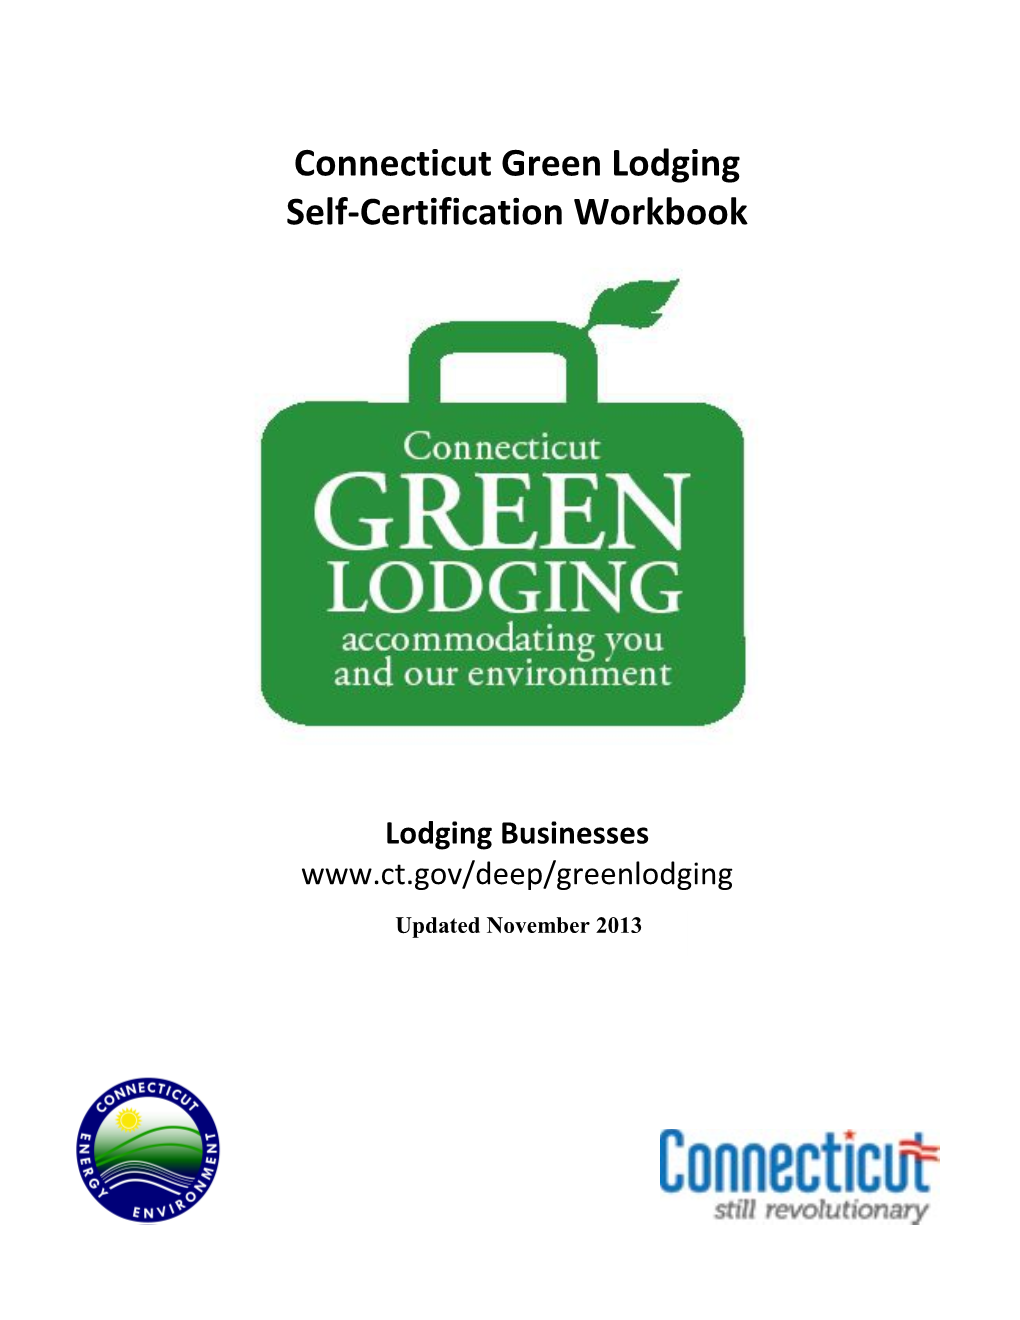 CT Green Lodging Self-Certification Workbook